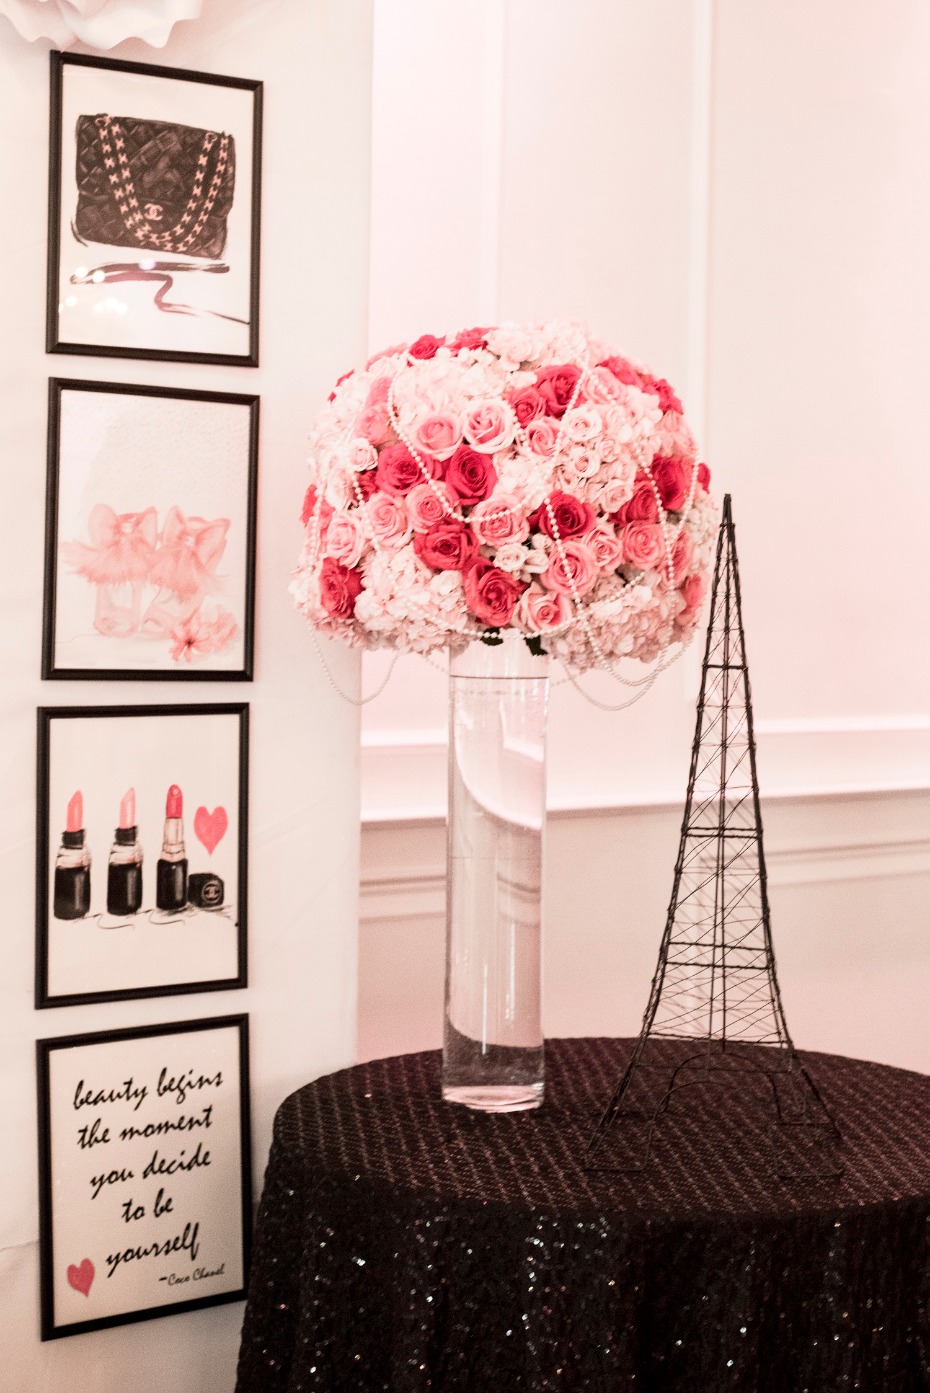 Hot pink details at this Chanel Paris bridal shower